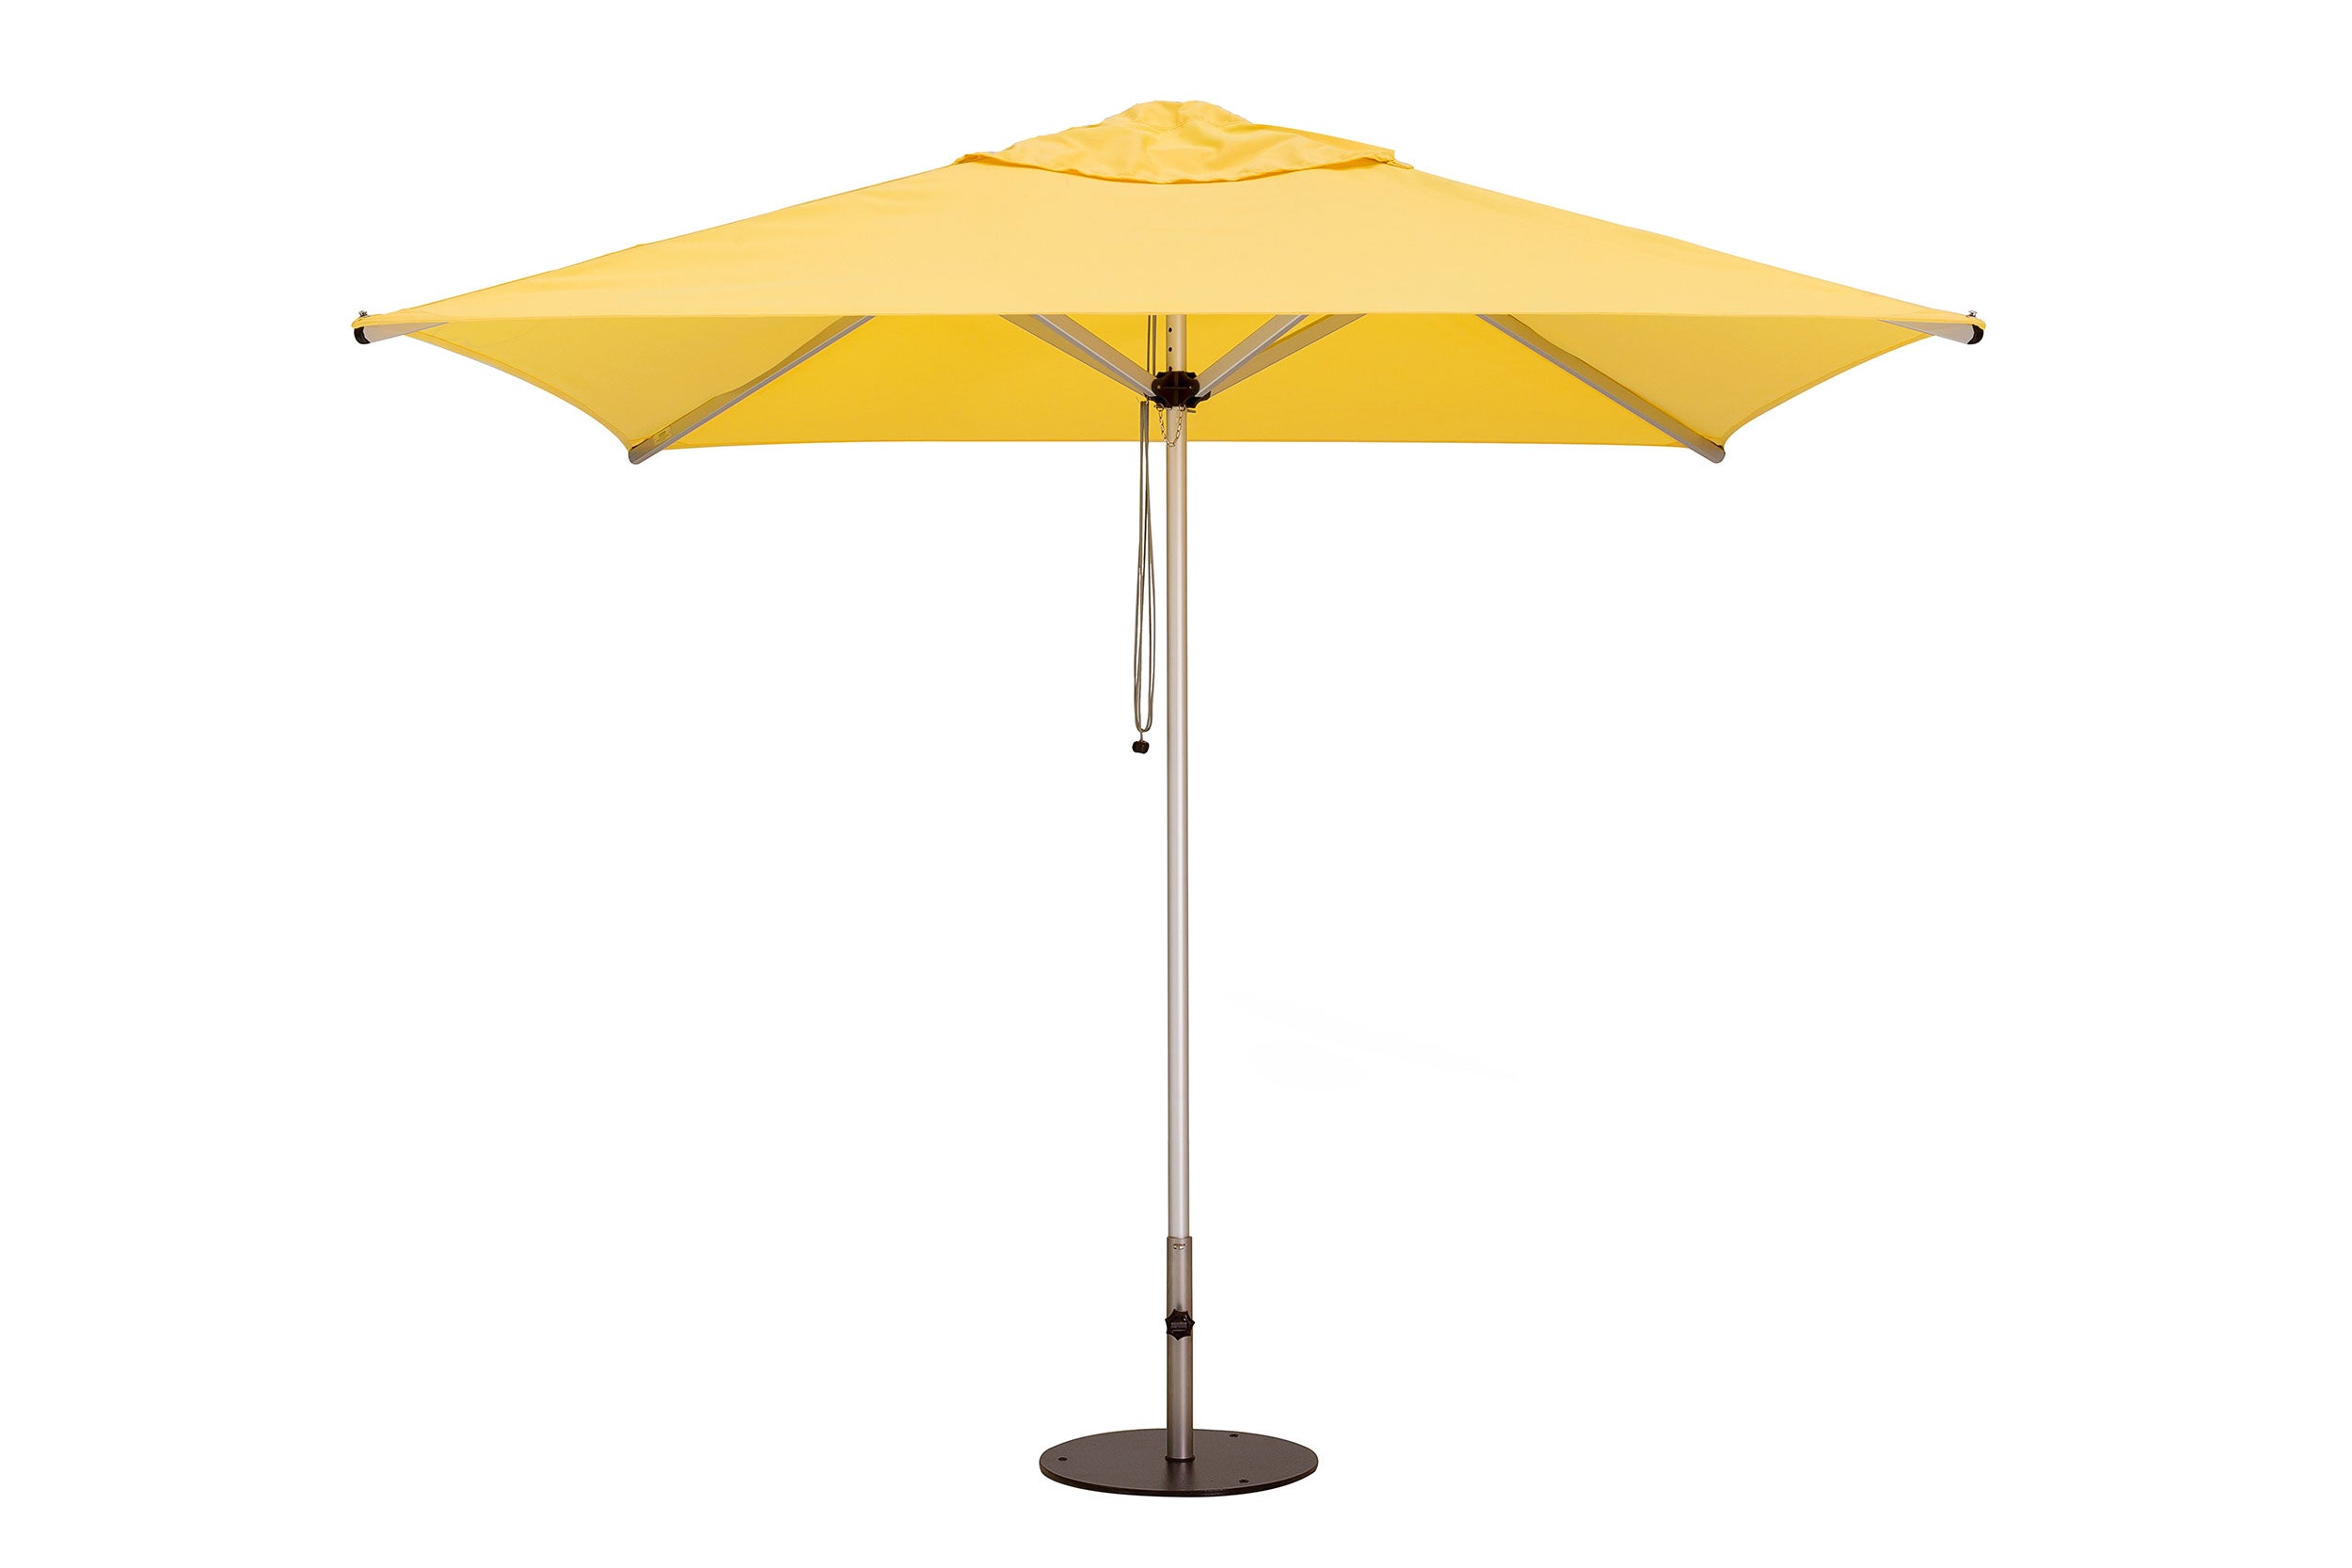 Woodline - 8’ Square Pulley Lift Umbrella, Aluminum/Stainless Steel - Mistral, Inox - MI25SA